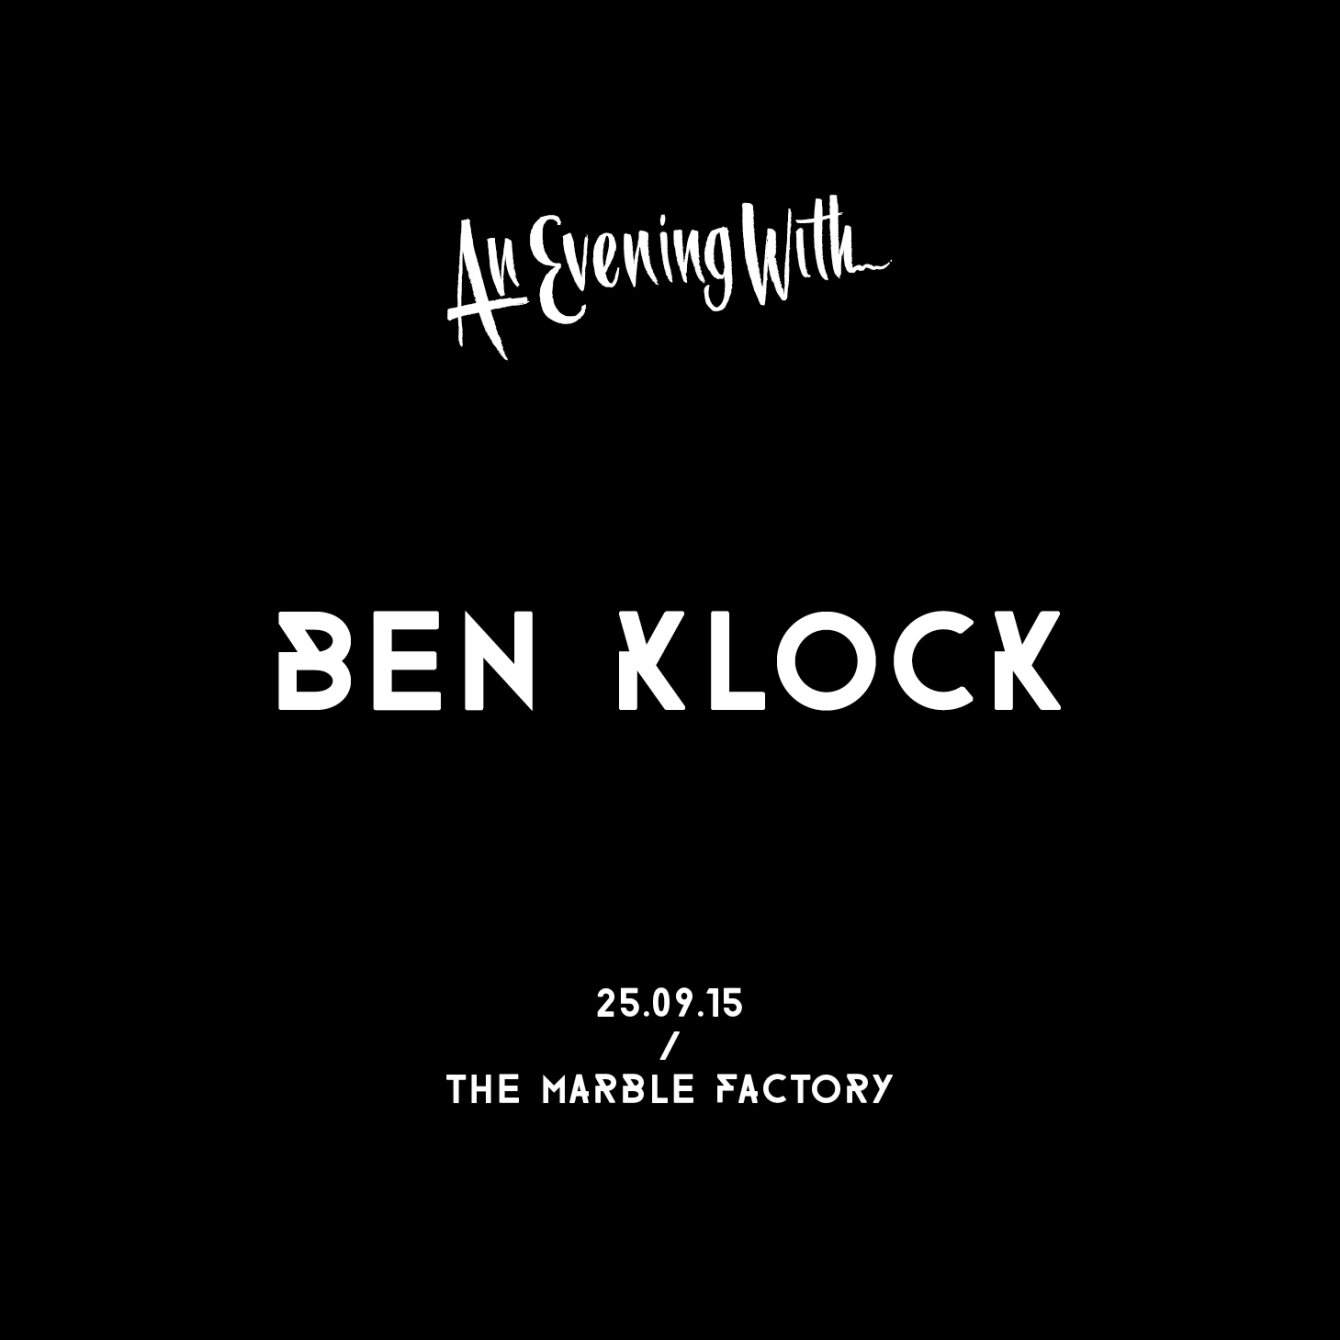 An Evening with Ben Klock - フライヤー表